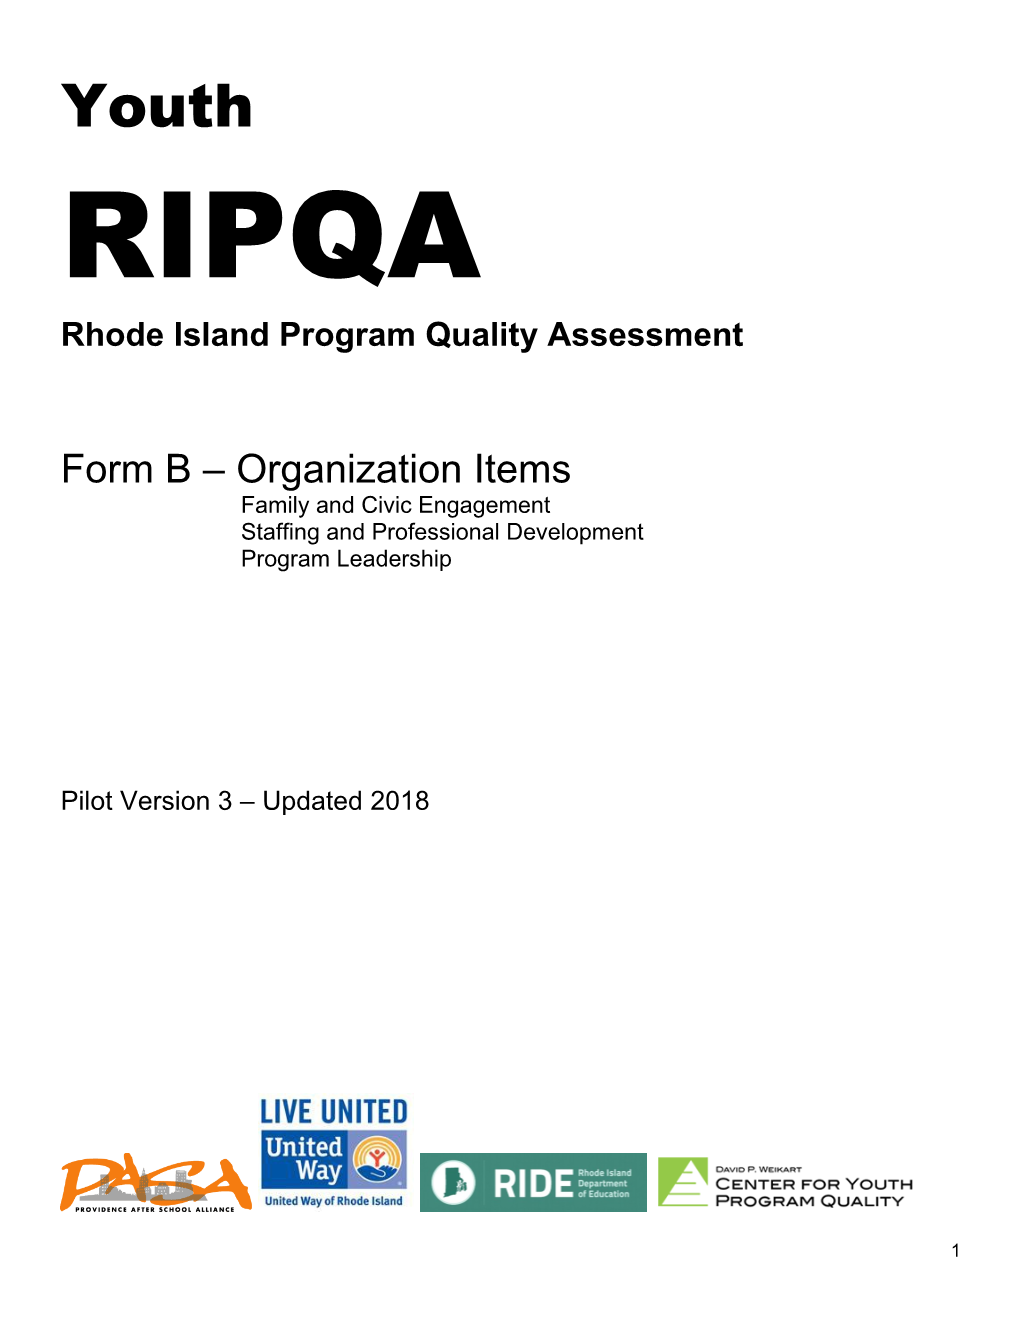 Rhode Island Program Quality Assessment